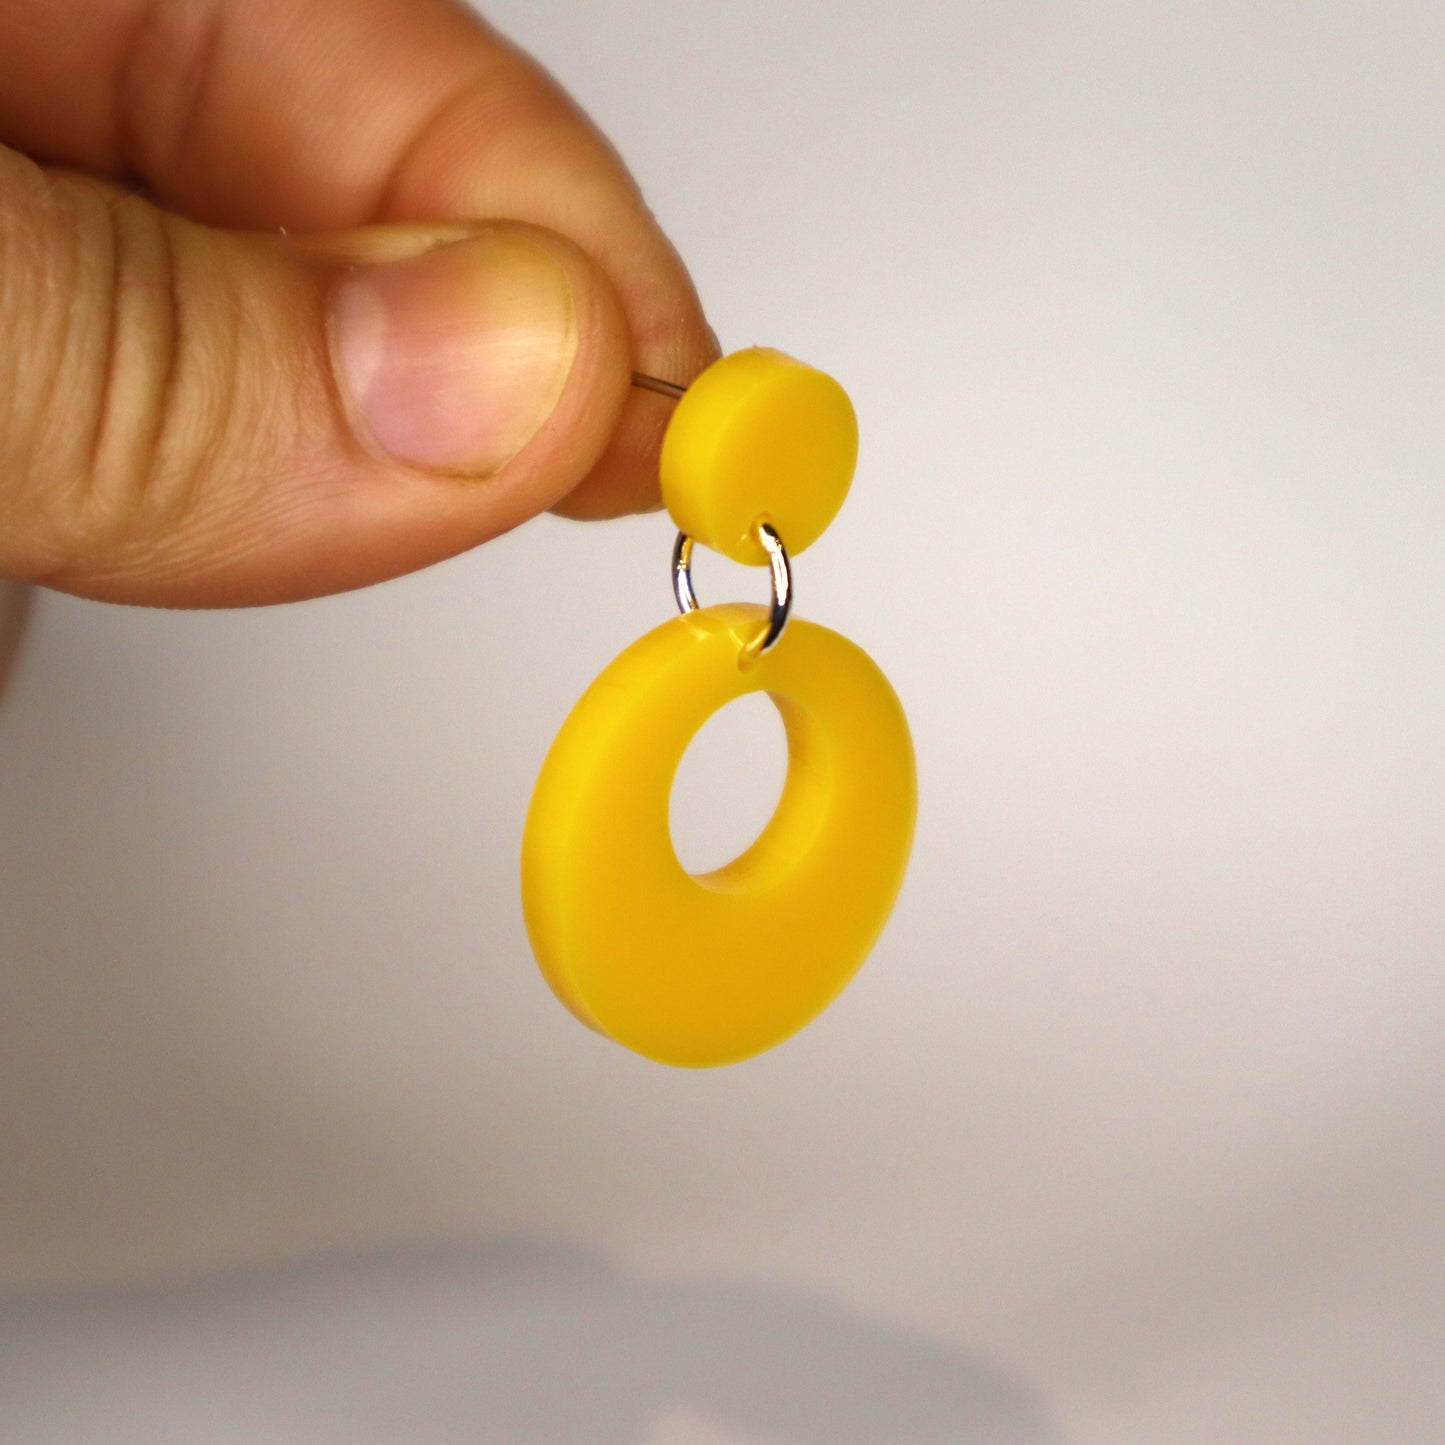 Retro Mod Earrings - laser cut acrylic - yellow